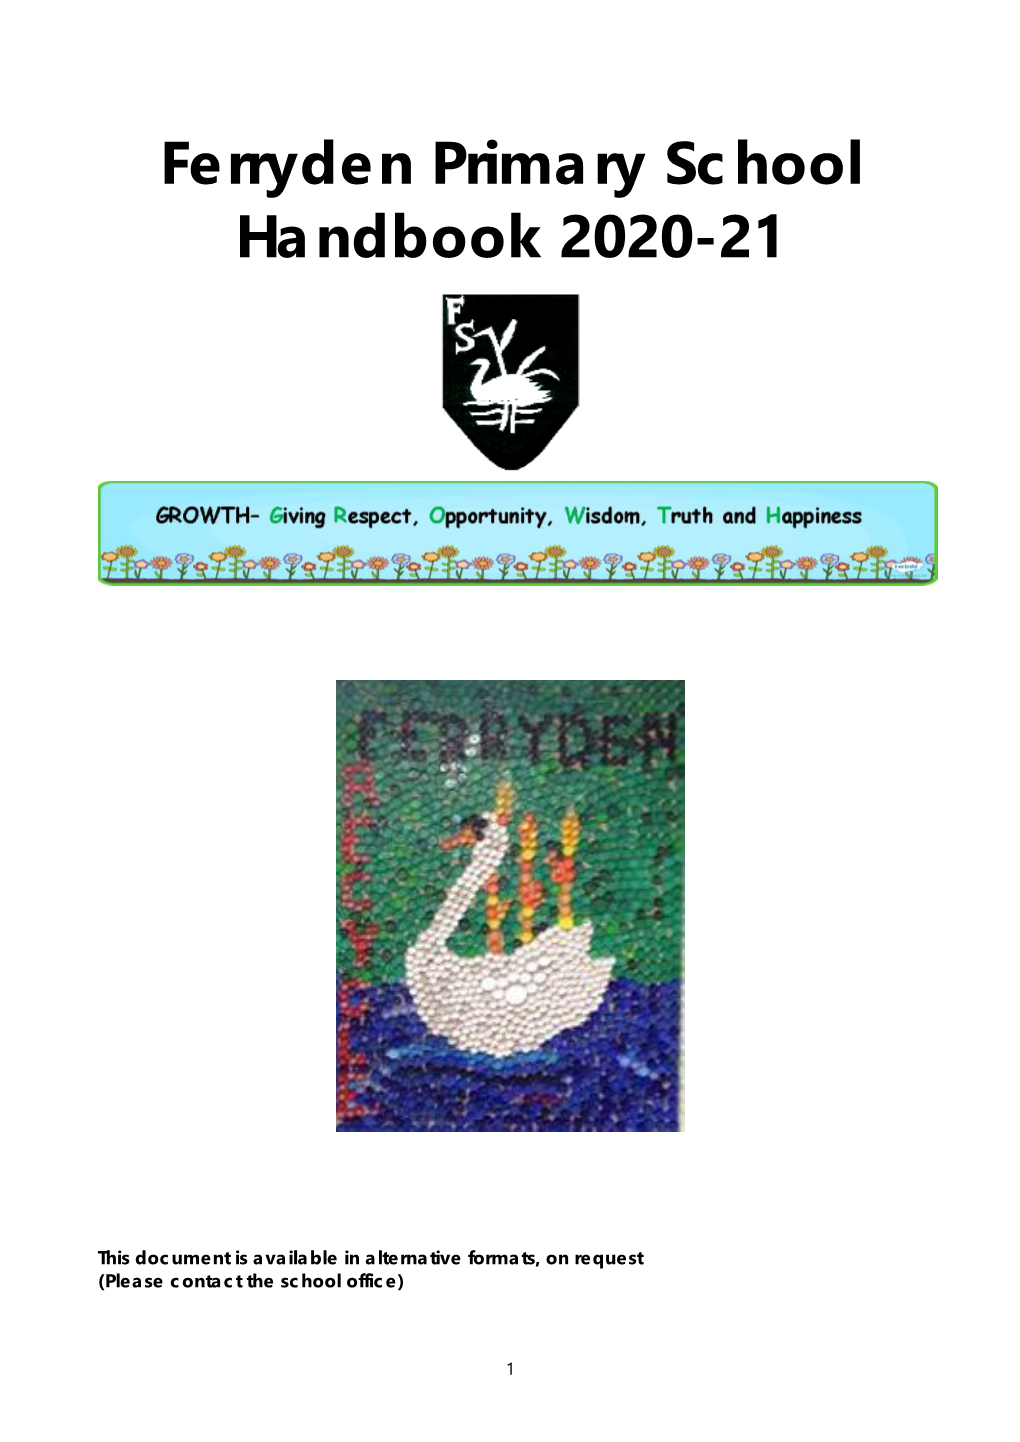 Ferryden Primary School Handbook 2020-21